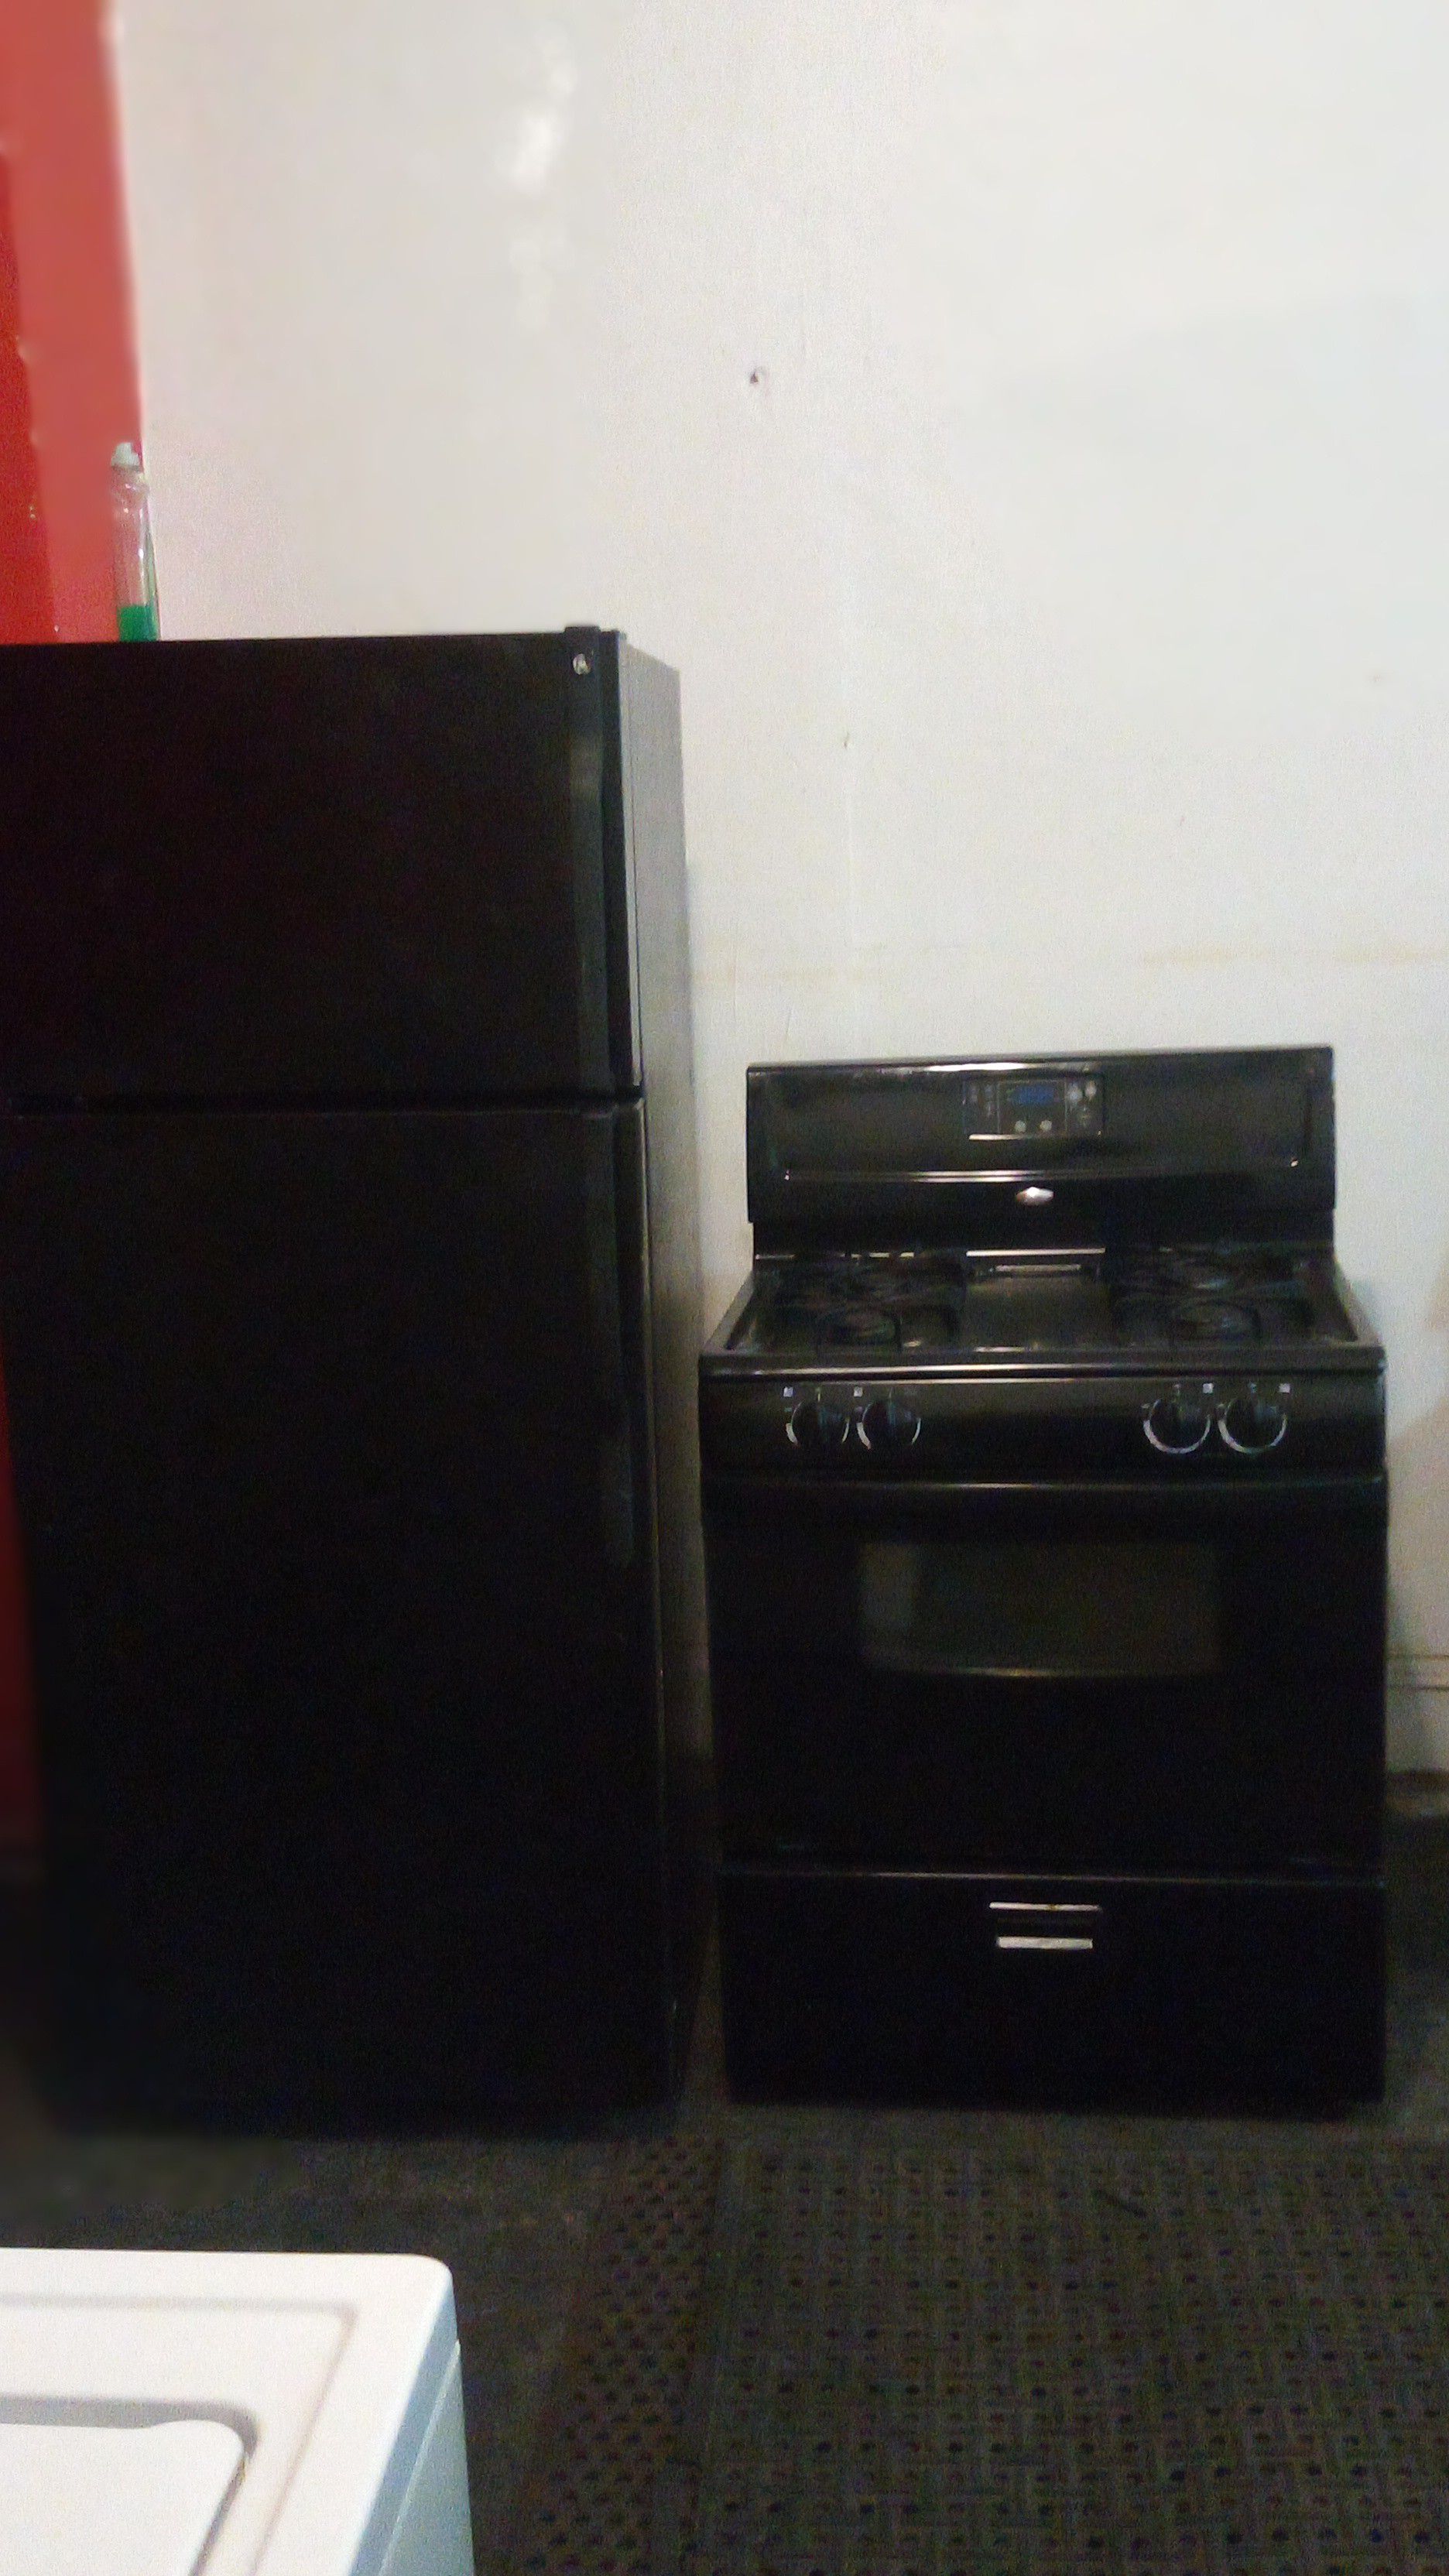 Black fridge and stove